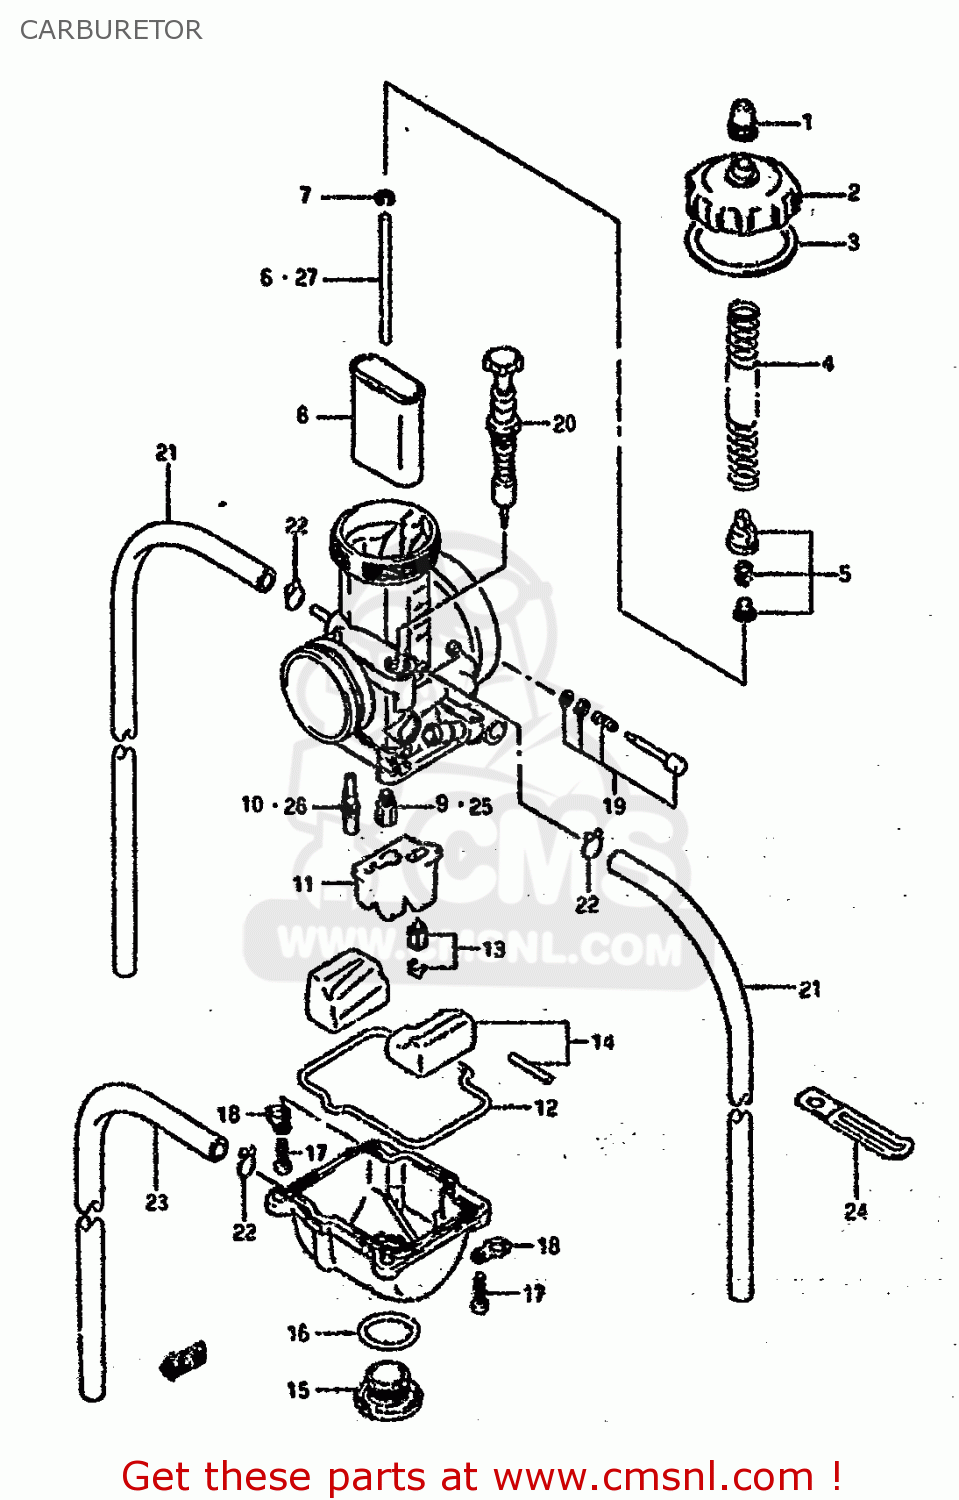 suzuki ozark 250 carburetor diagram